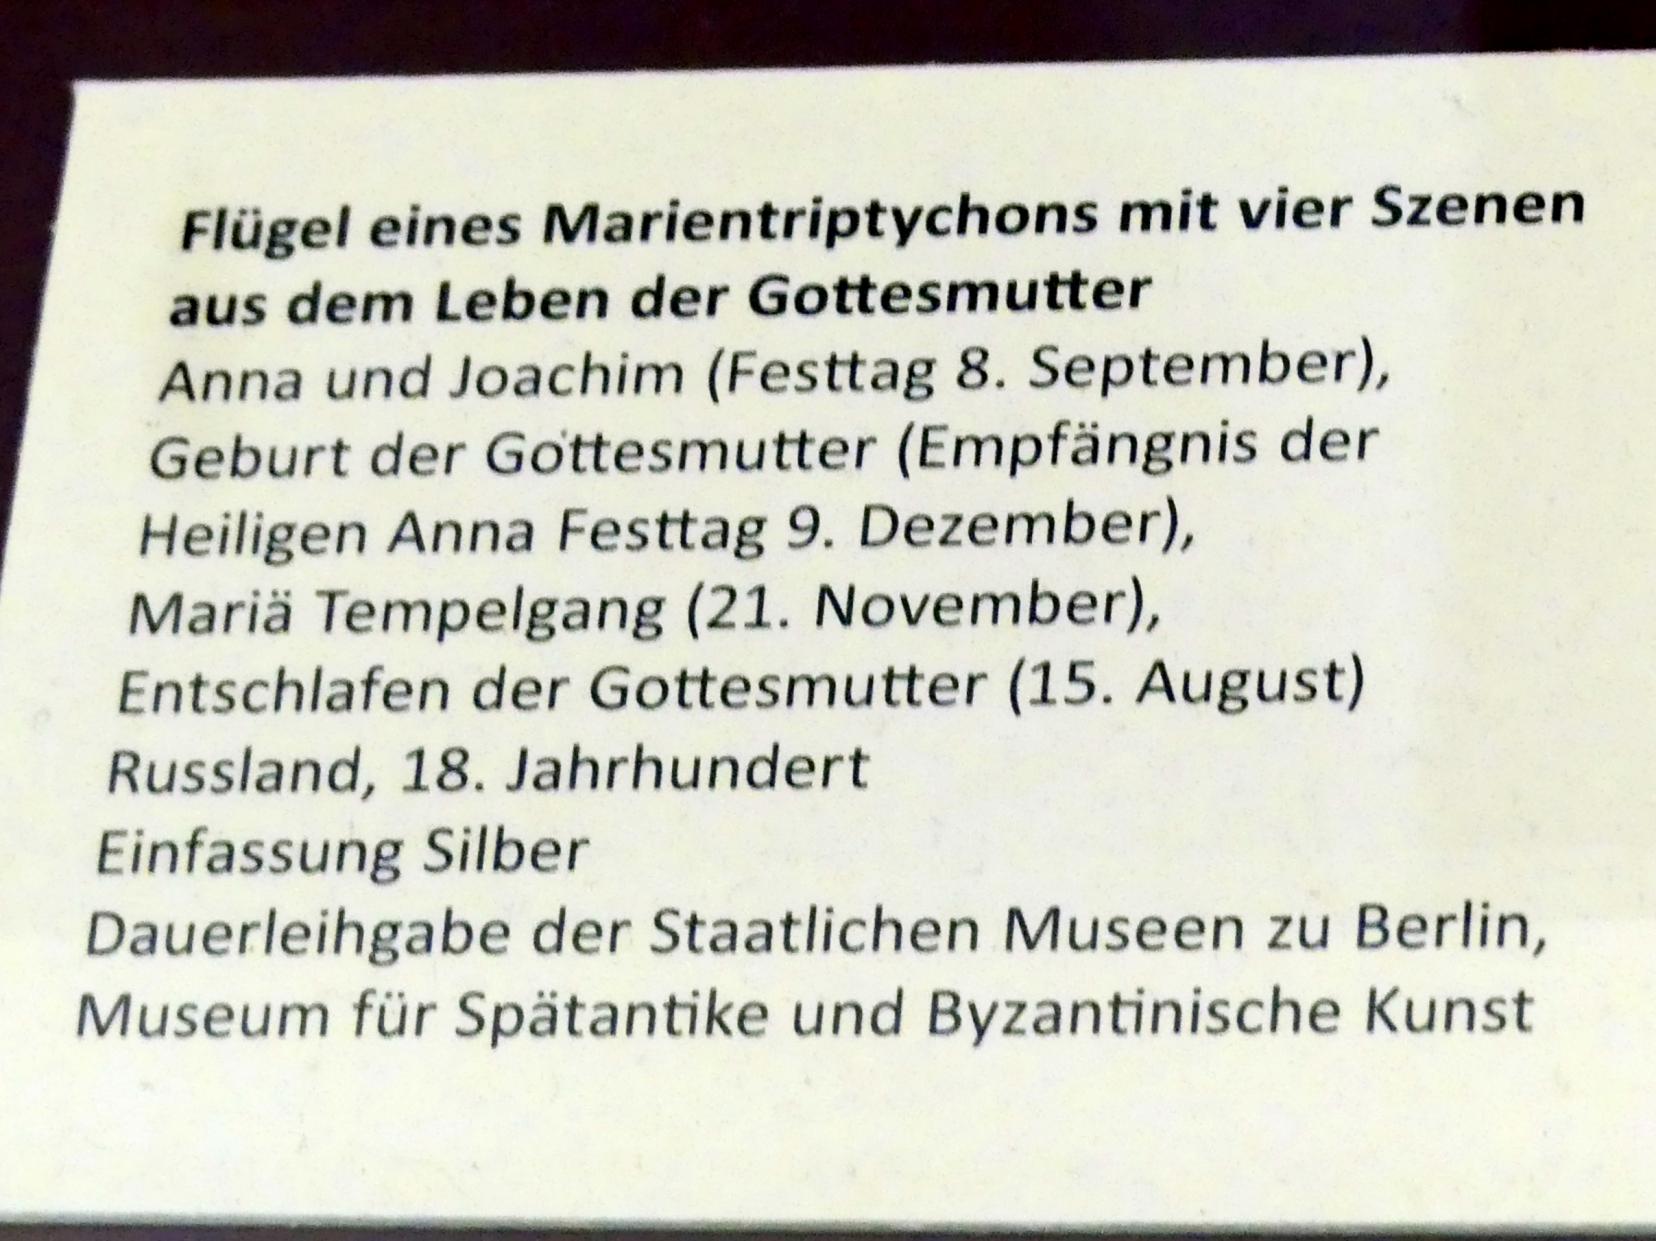 Flügel eines Marientriptychons mit vier Szenen aus dem Leben der Gottesmutter, Frankfurt am Main, Ikonen-Museum, Erdgeschoss, 18. Jhd., Bild 2/2